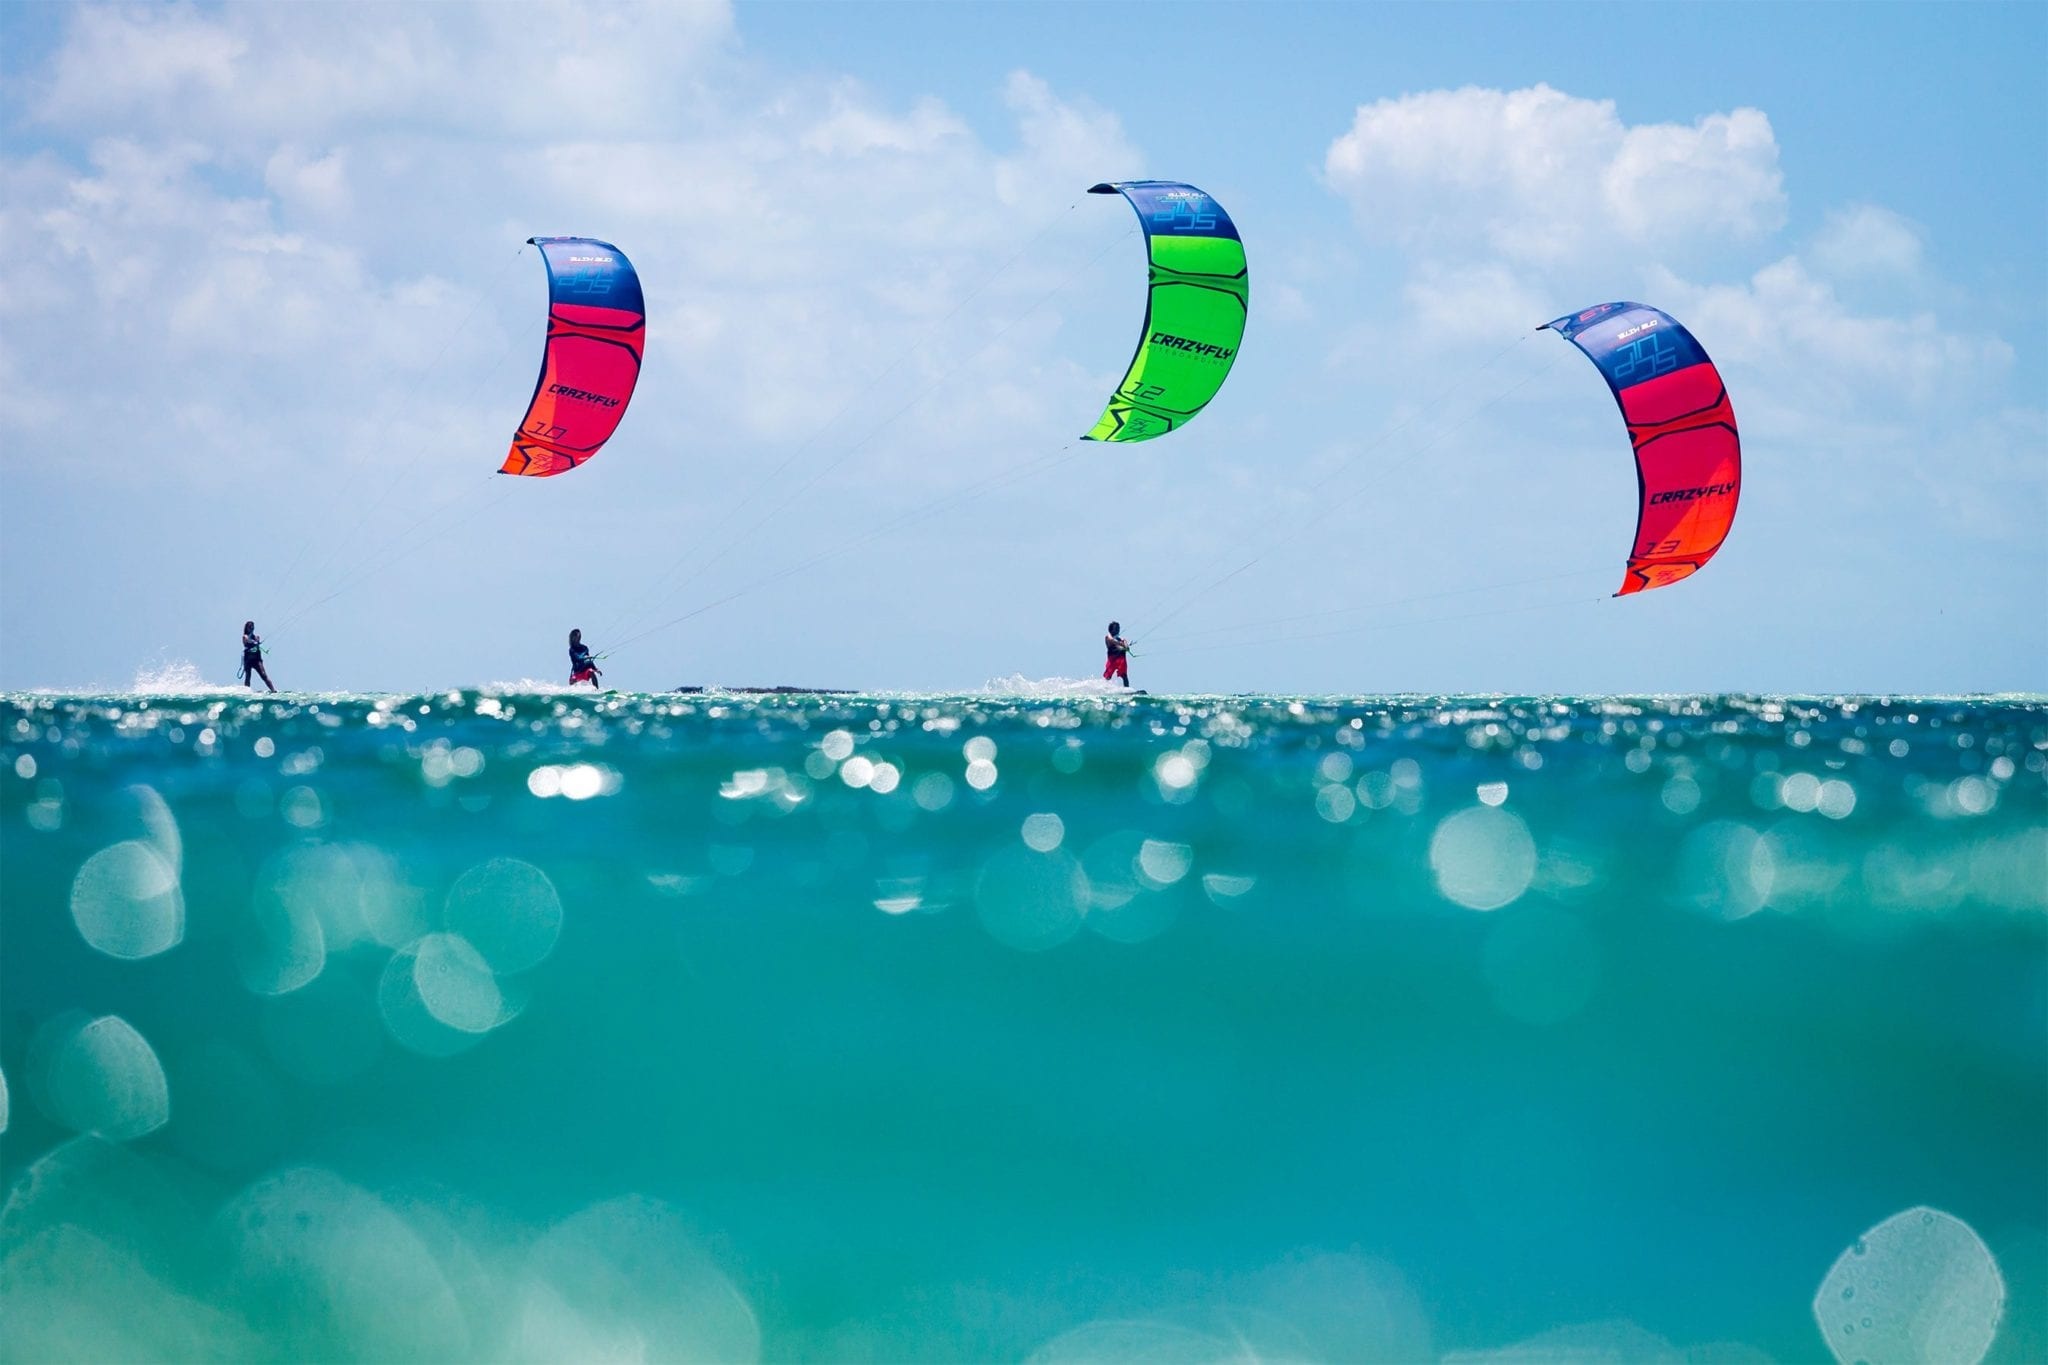 Kiteboarding: Crazyfly, Light wind kite, Foilboard products, Equipment for kitesurfing. 2050x1370 HD Wallpaper.